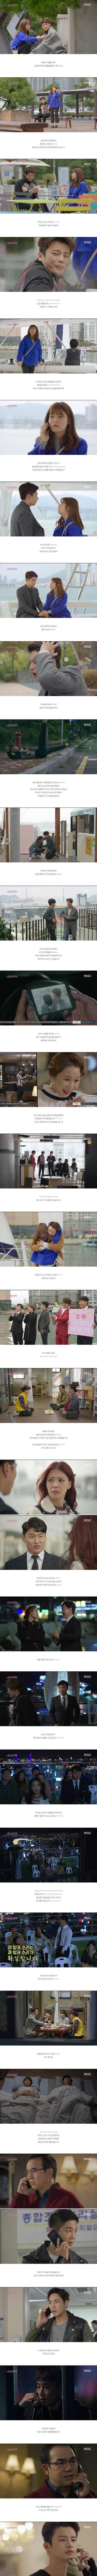 episode 12 captures for the Korean drama 'Shopping King Louis'